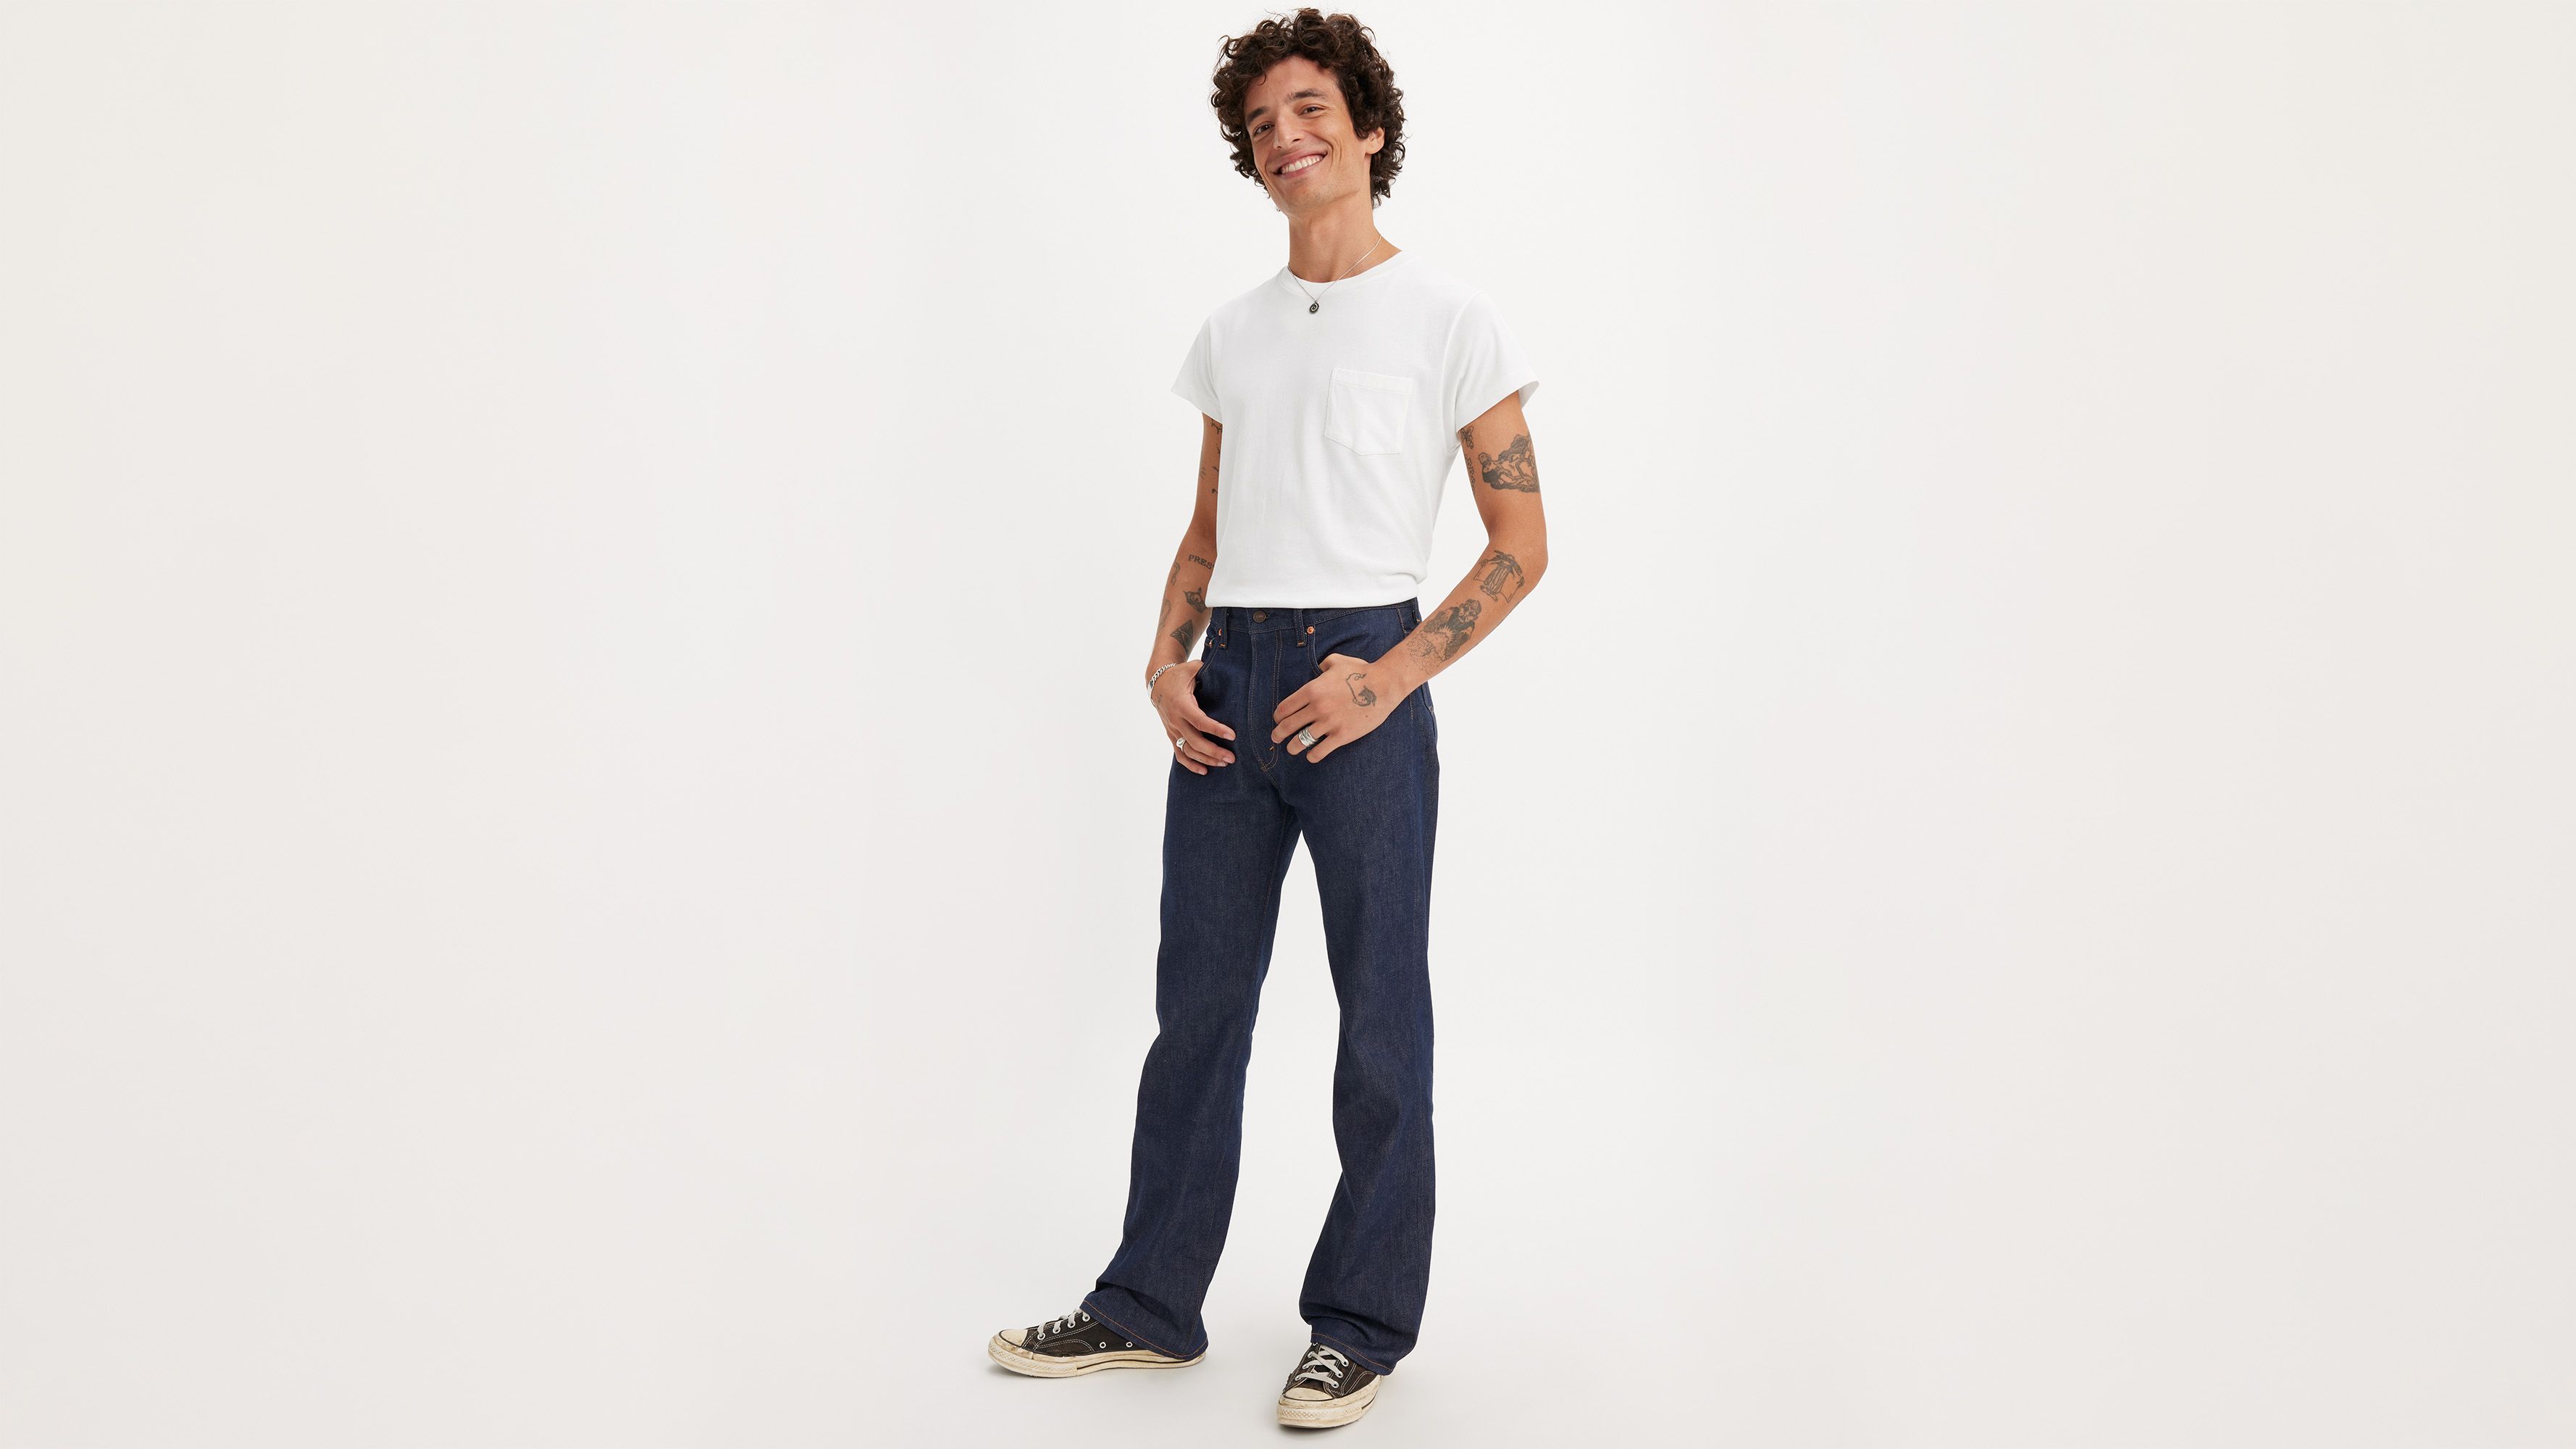 Levi’s® Vintage Clothing 1970s 517™ Bootcut Jeans